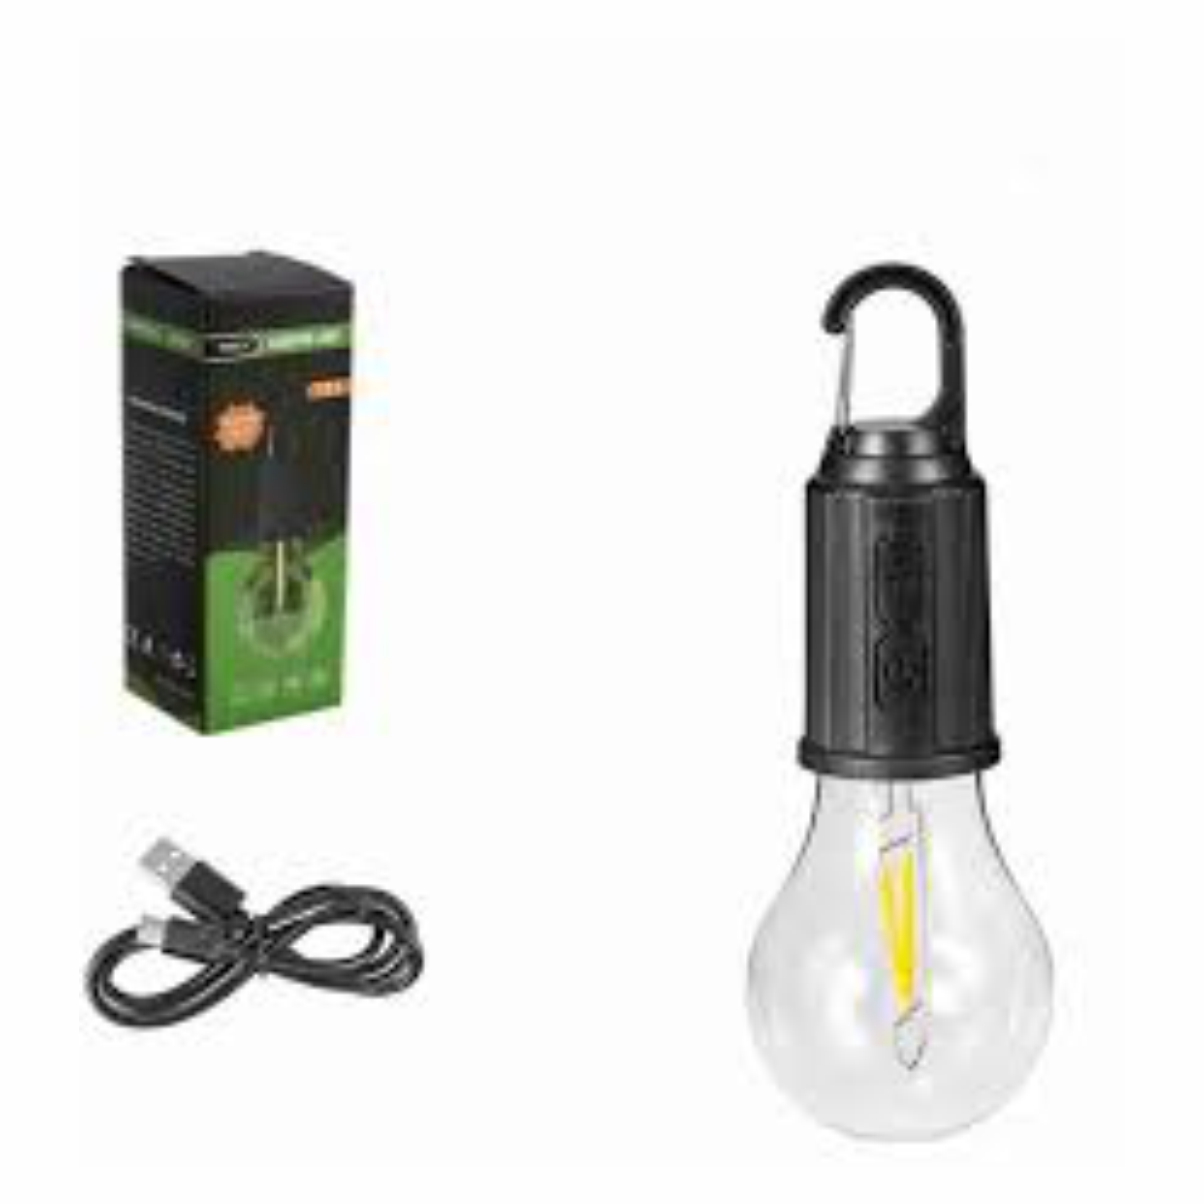  LED Camping Lamp 600mAh Portable Camping Light 5 hrs Bulb Emergency Light